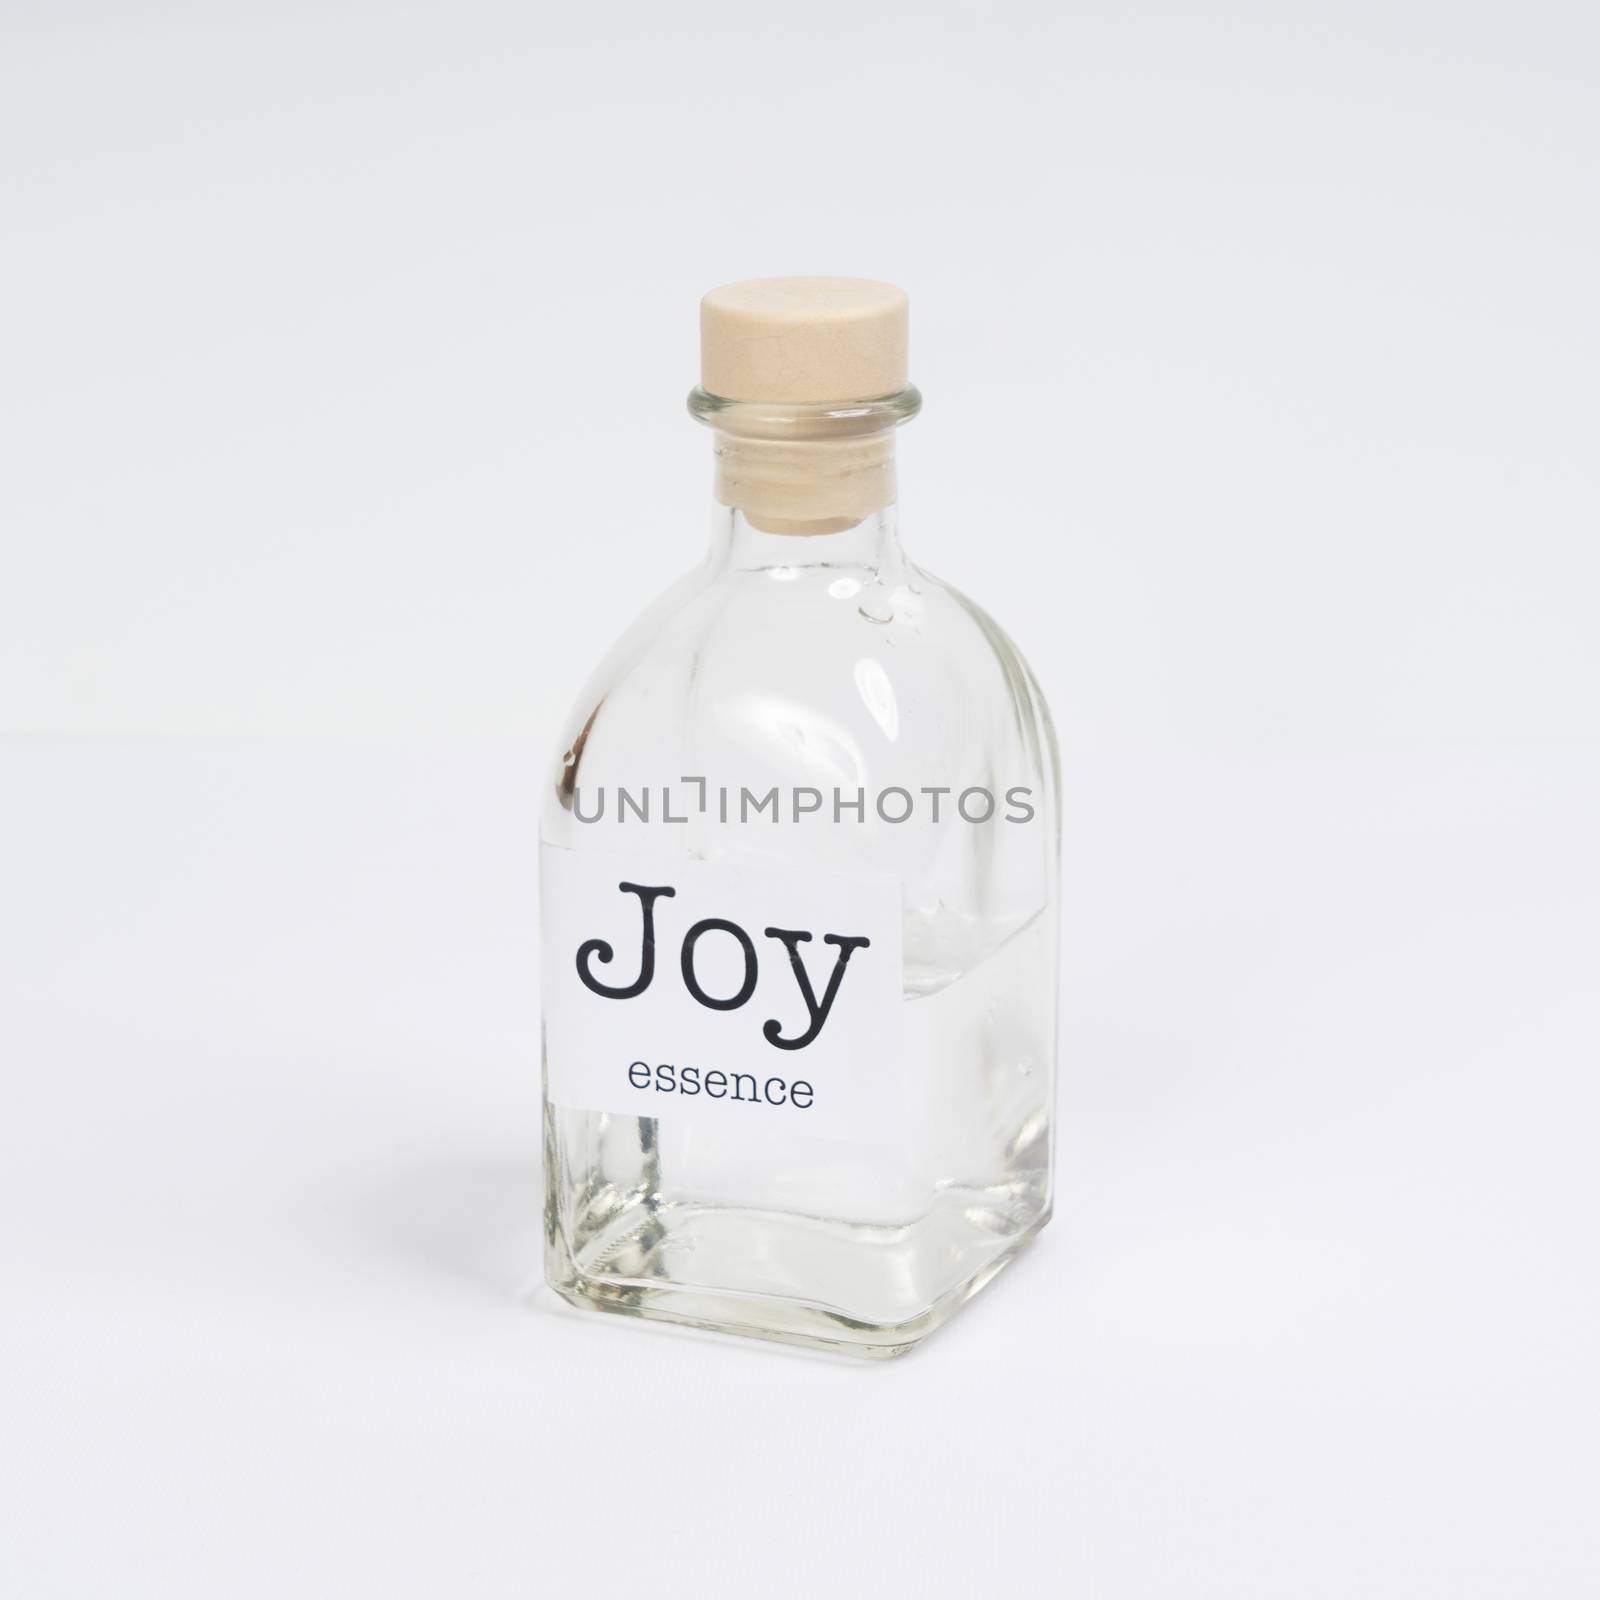 a glass bottle containing Joy essence